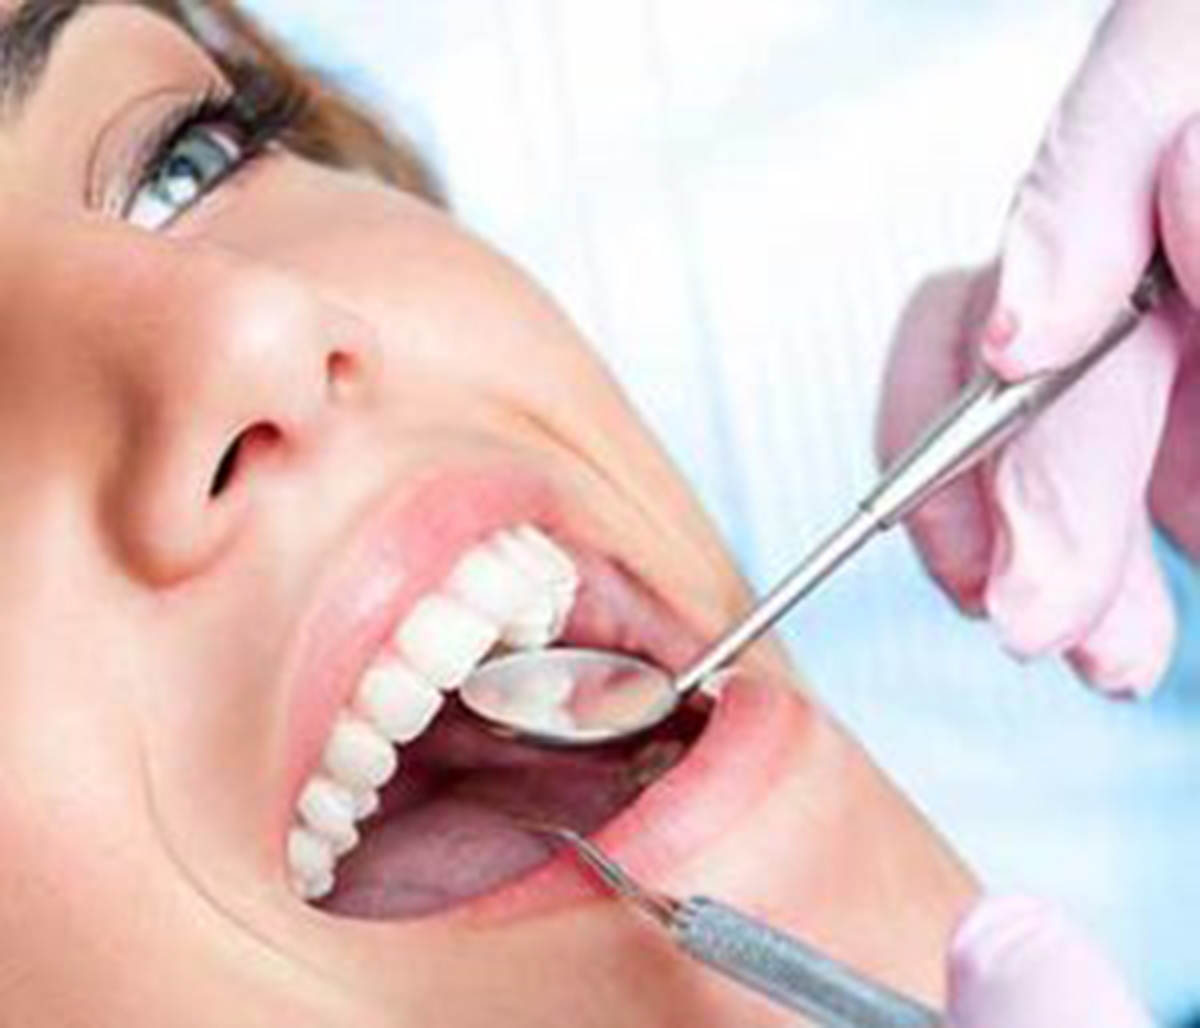 biologic dentist provides gentle, advanced treatment